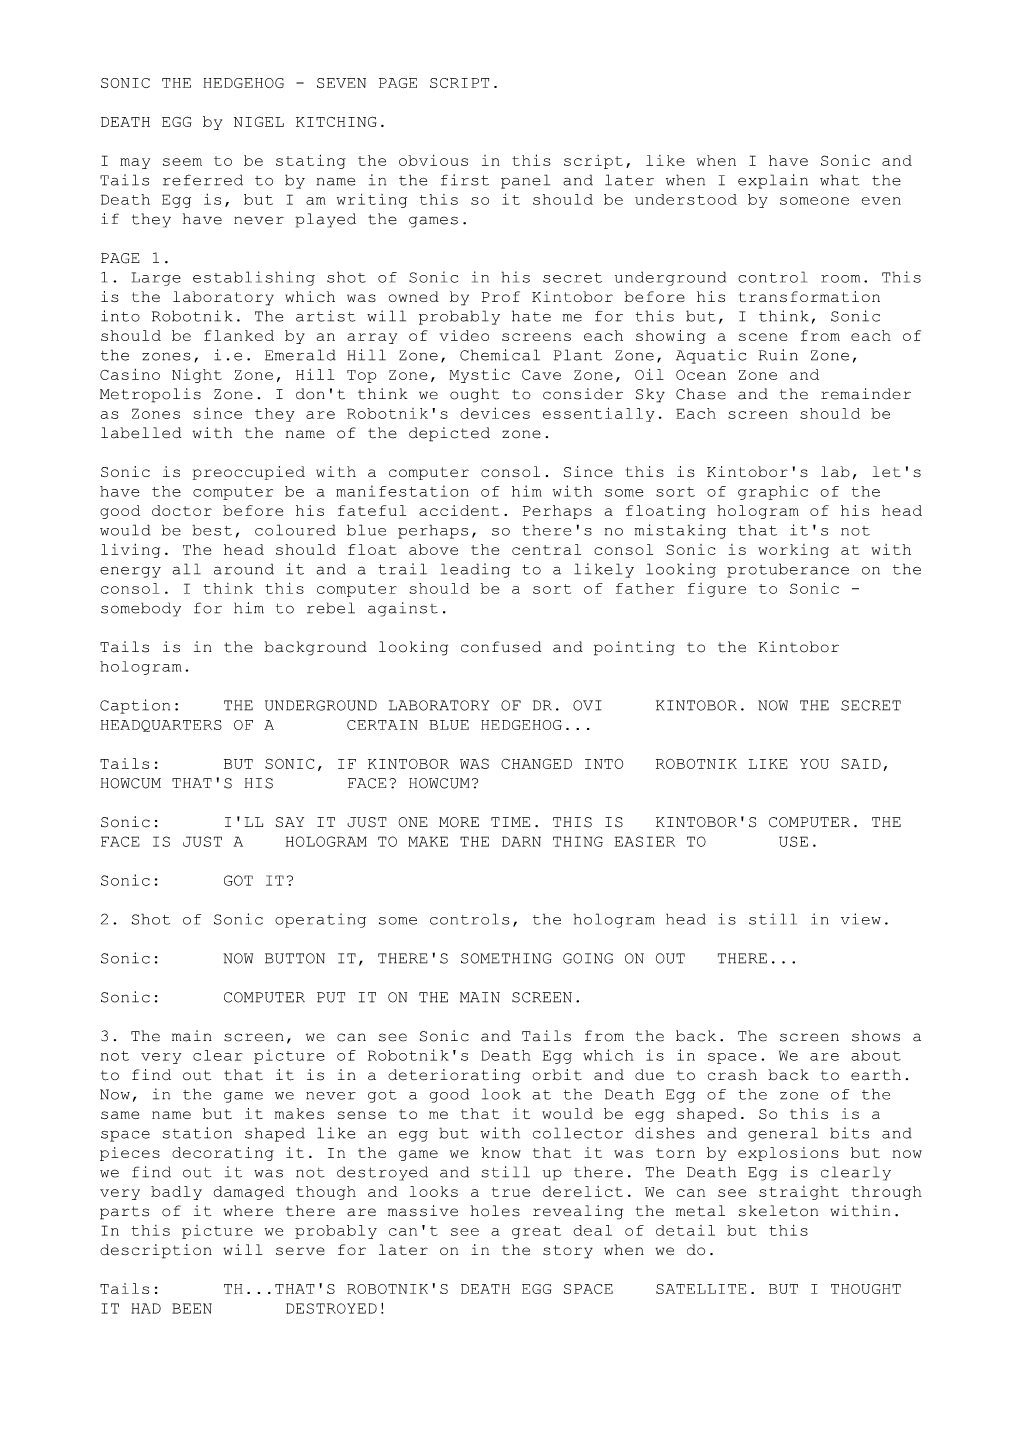 Sonic the Hedgehog - Seven Page Script